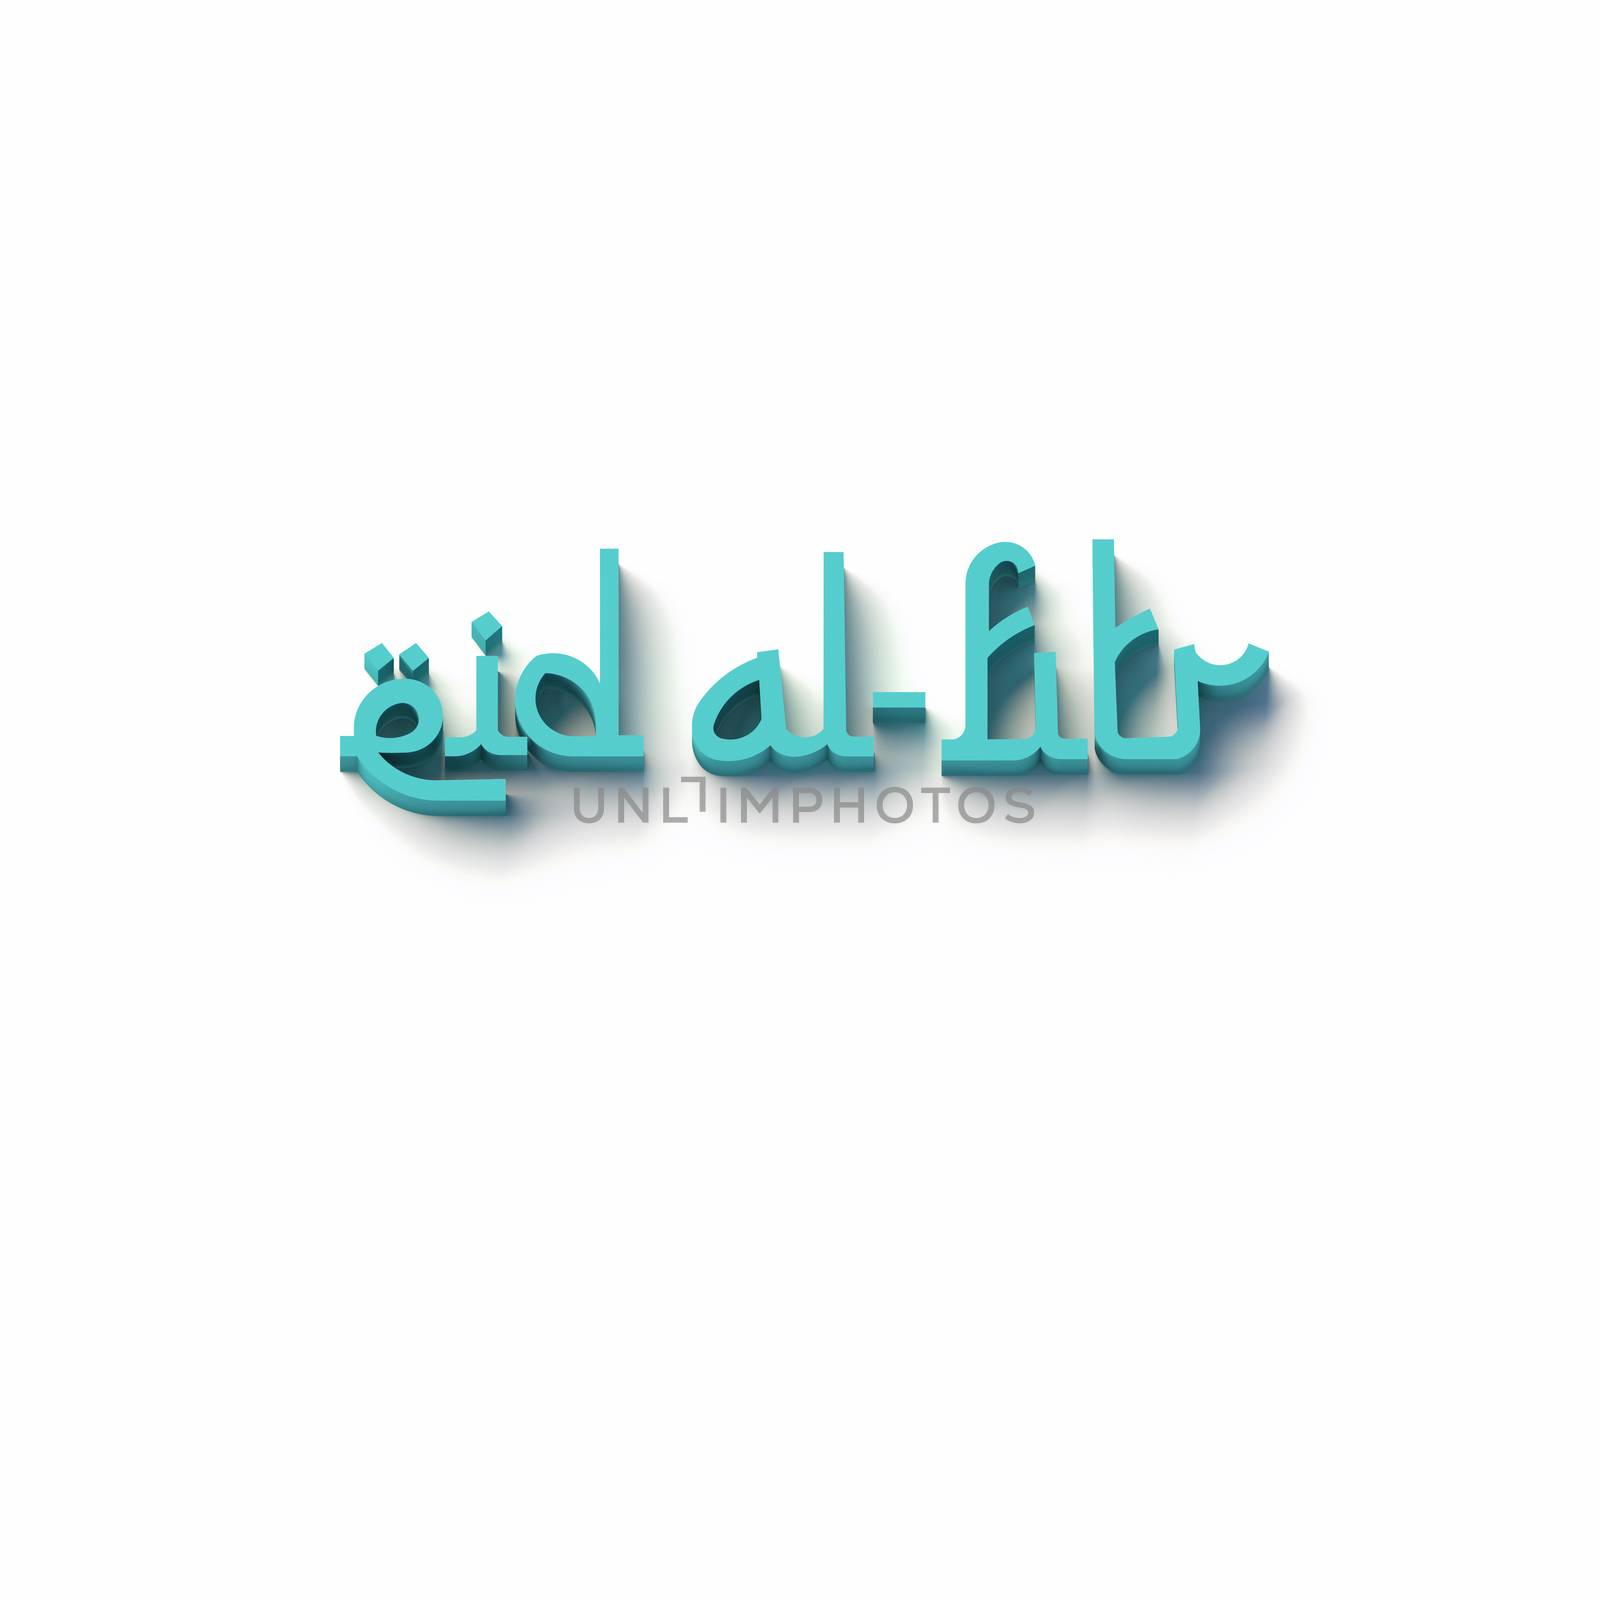 3D RENDERING WORDS 'eid al-fitr' by PrettyTG